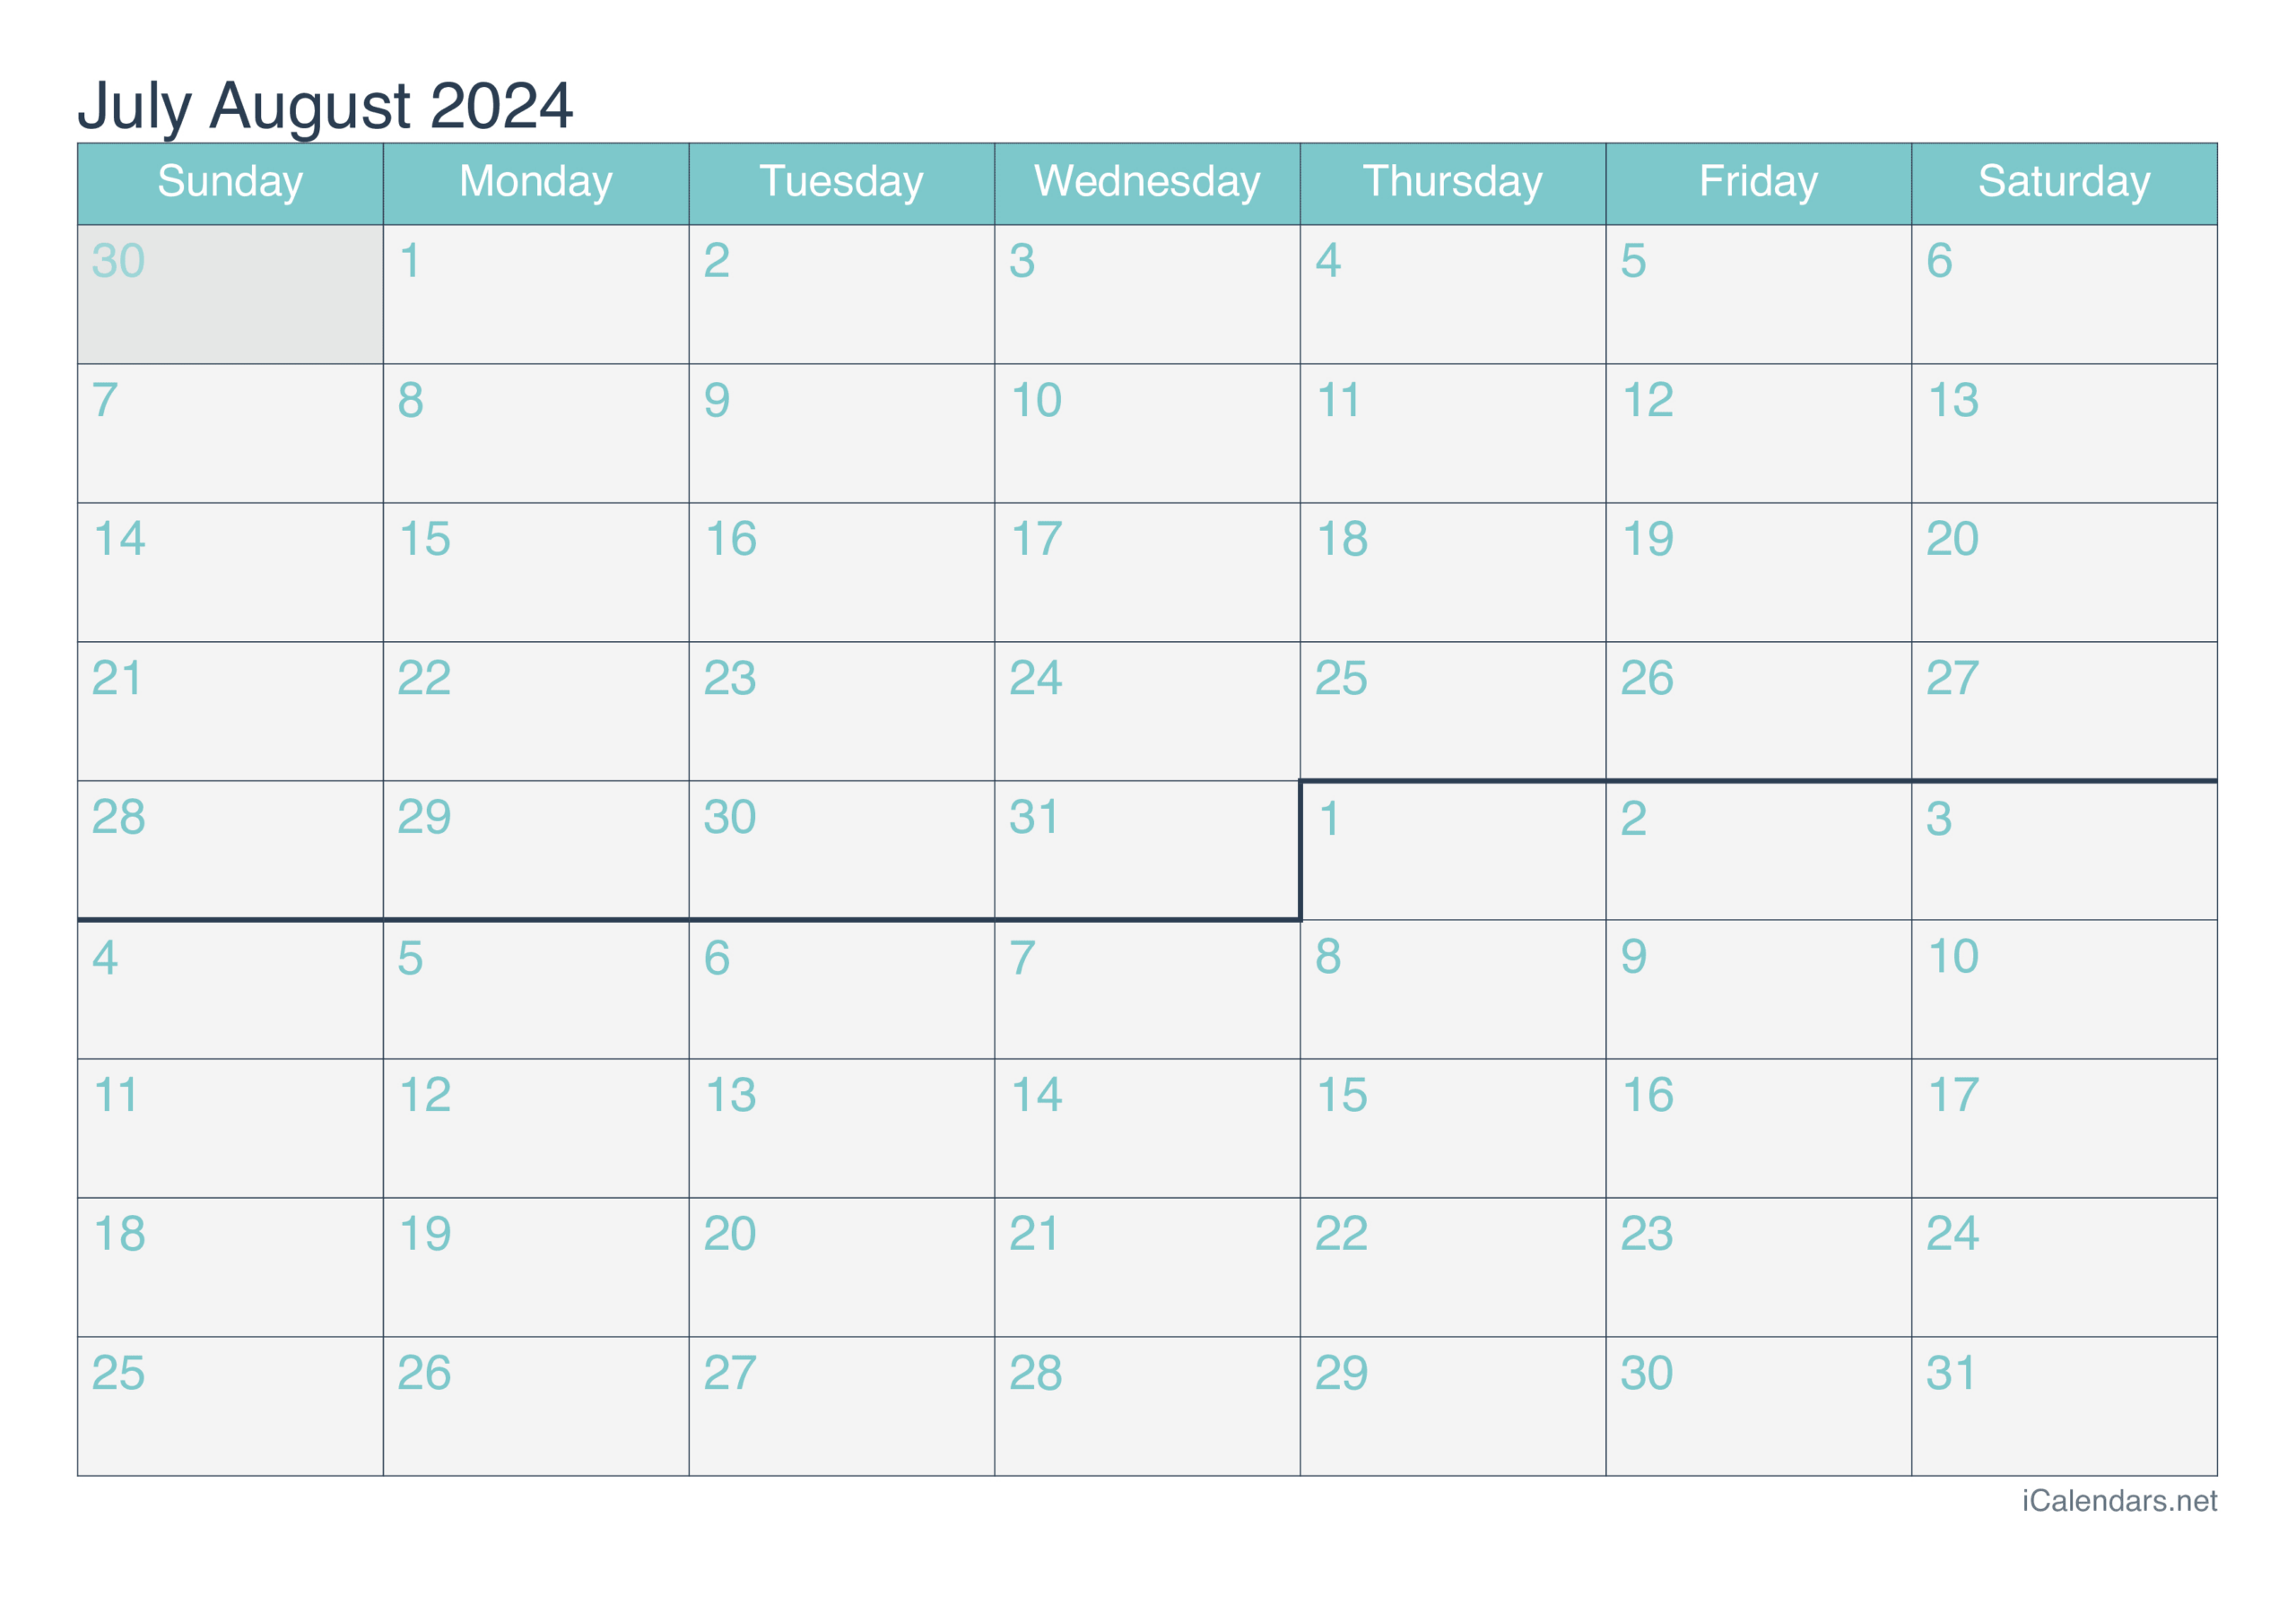 July And August 2024 Printable Calendar regarding Blank July August 2024 Calendar